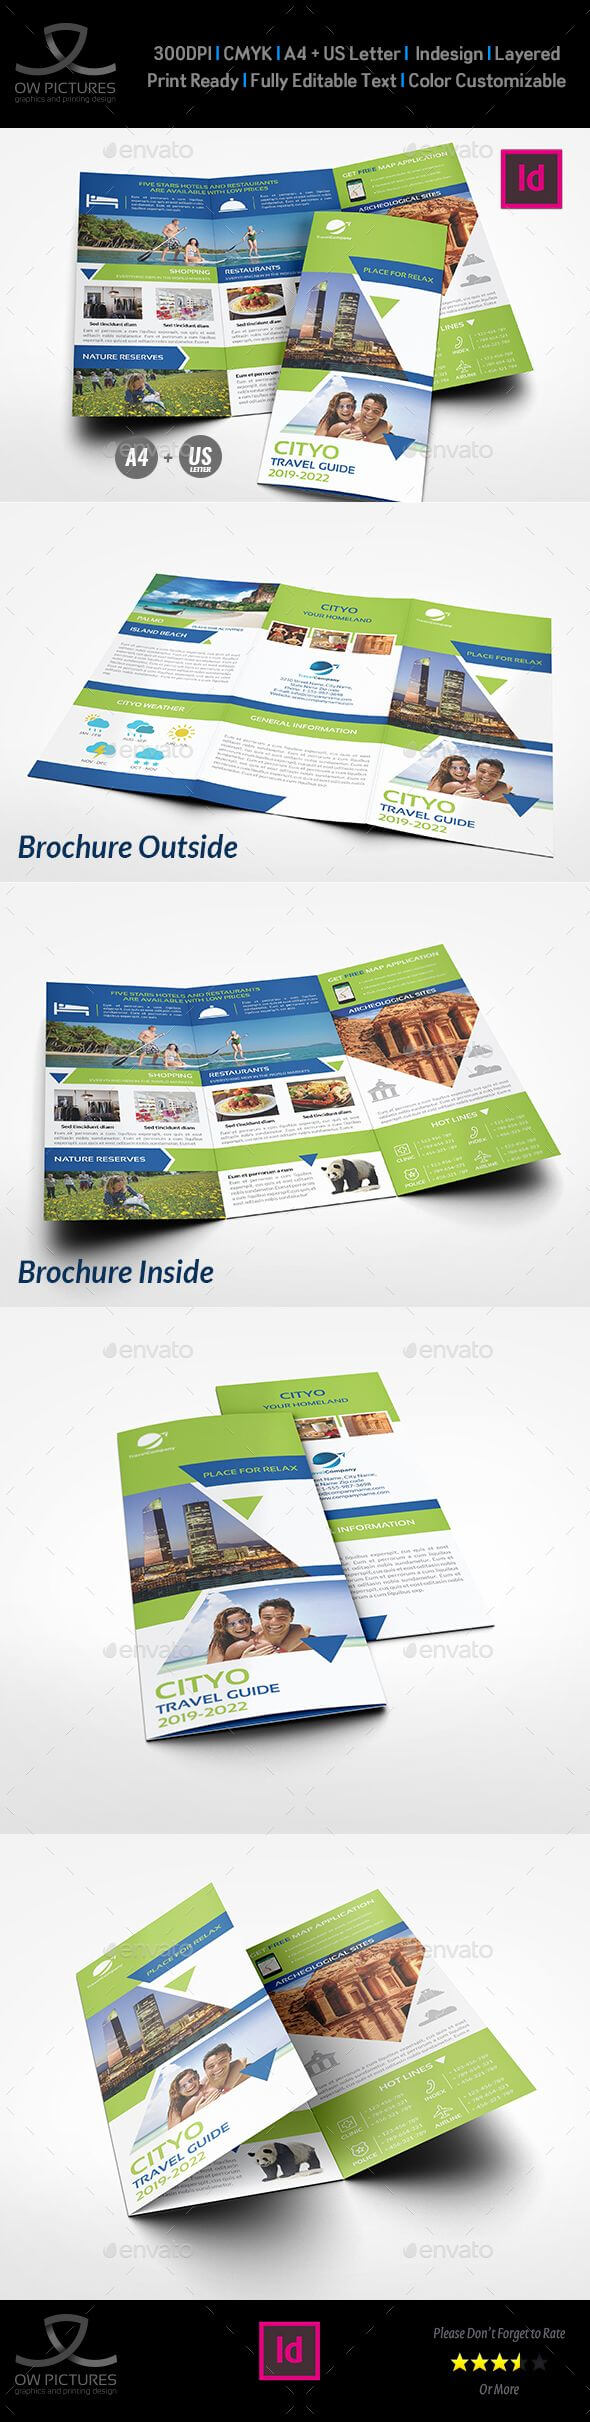 Travel Guide Tri Fold Brochure Template | Brochure Tri Fold Inside Travel Guide Brochure Template